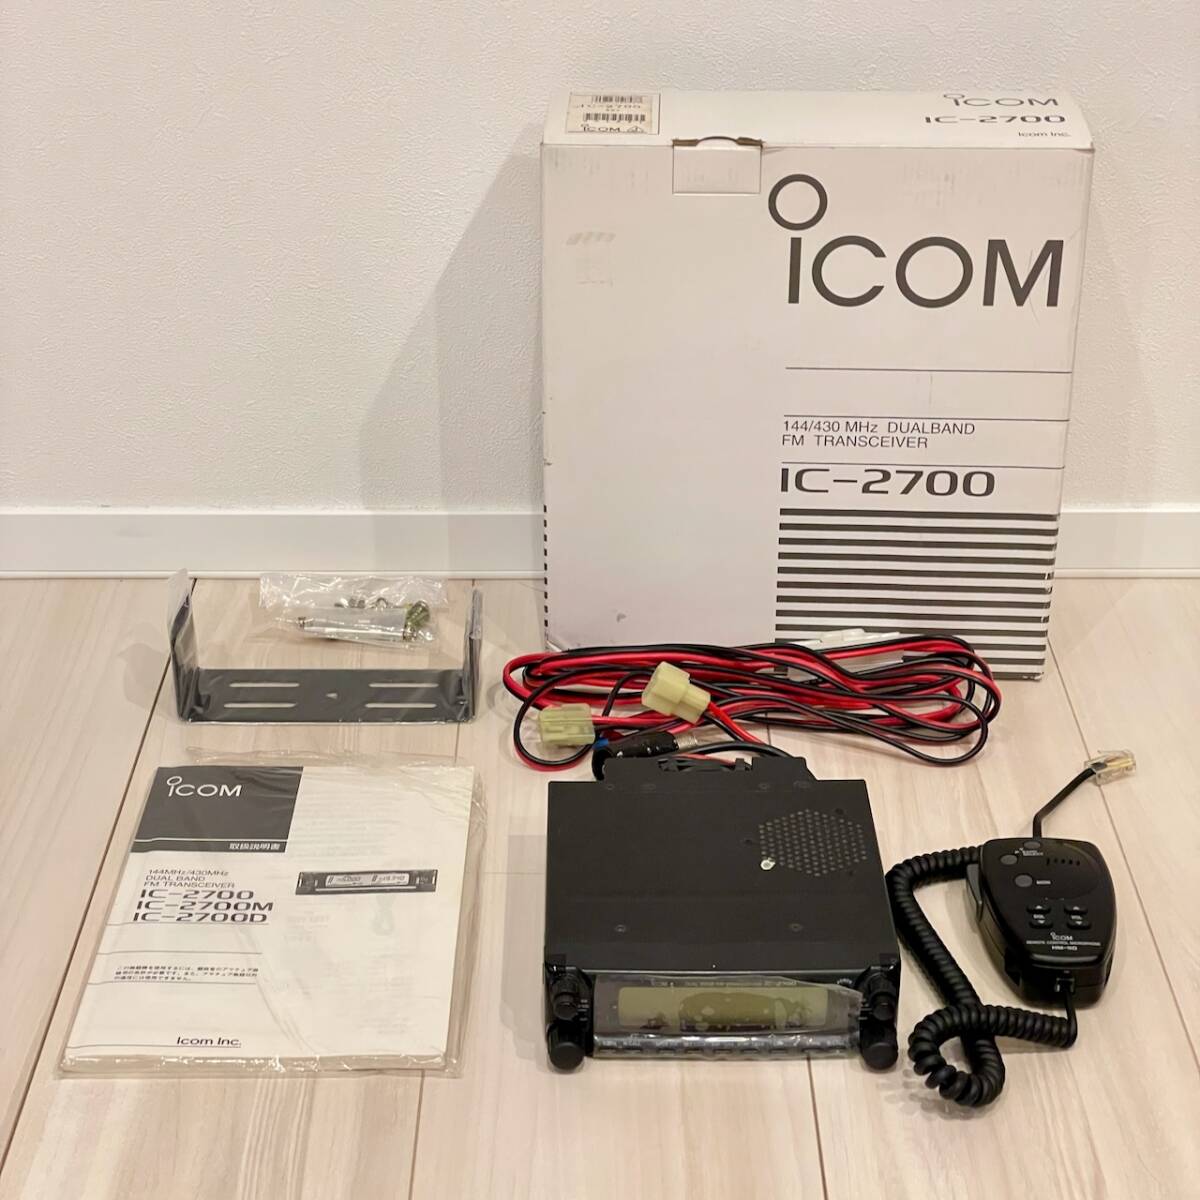  Icom /ICOM 144/430MHz dual band FM 10W transceiver IC-2700 ( lack of none )